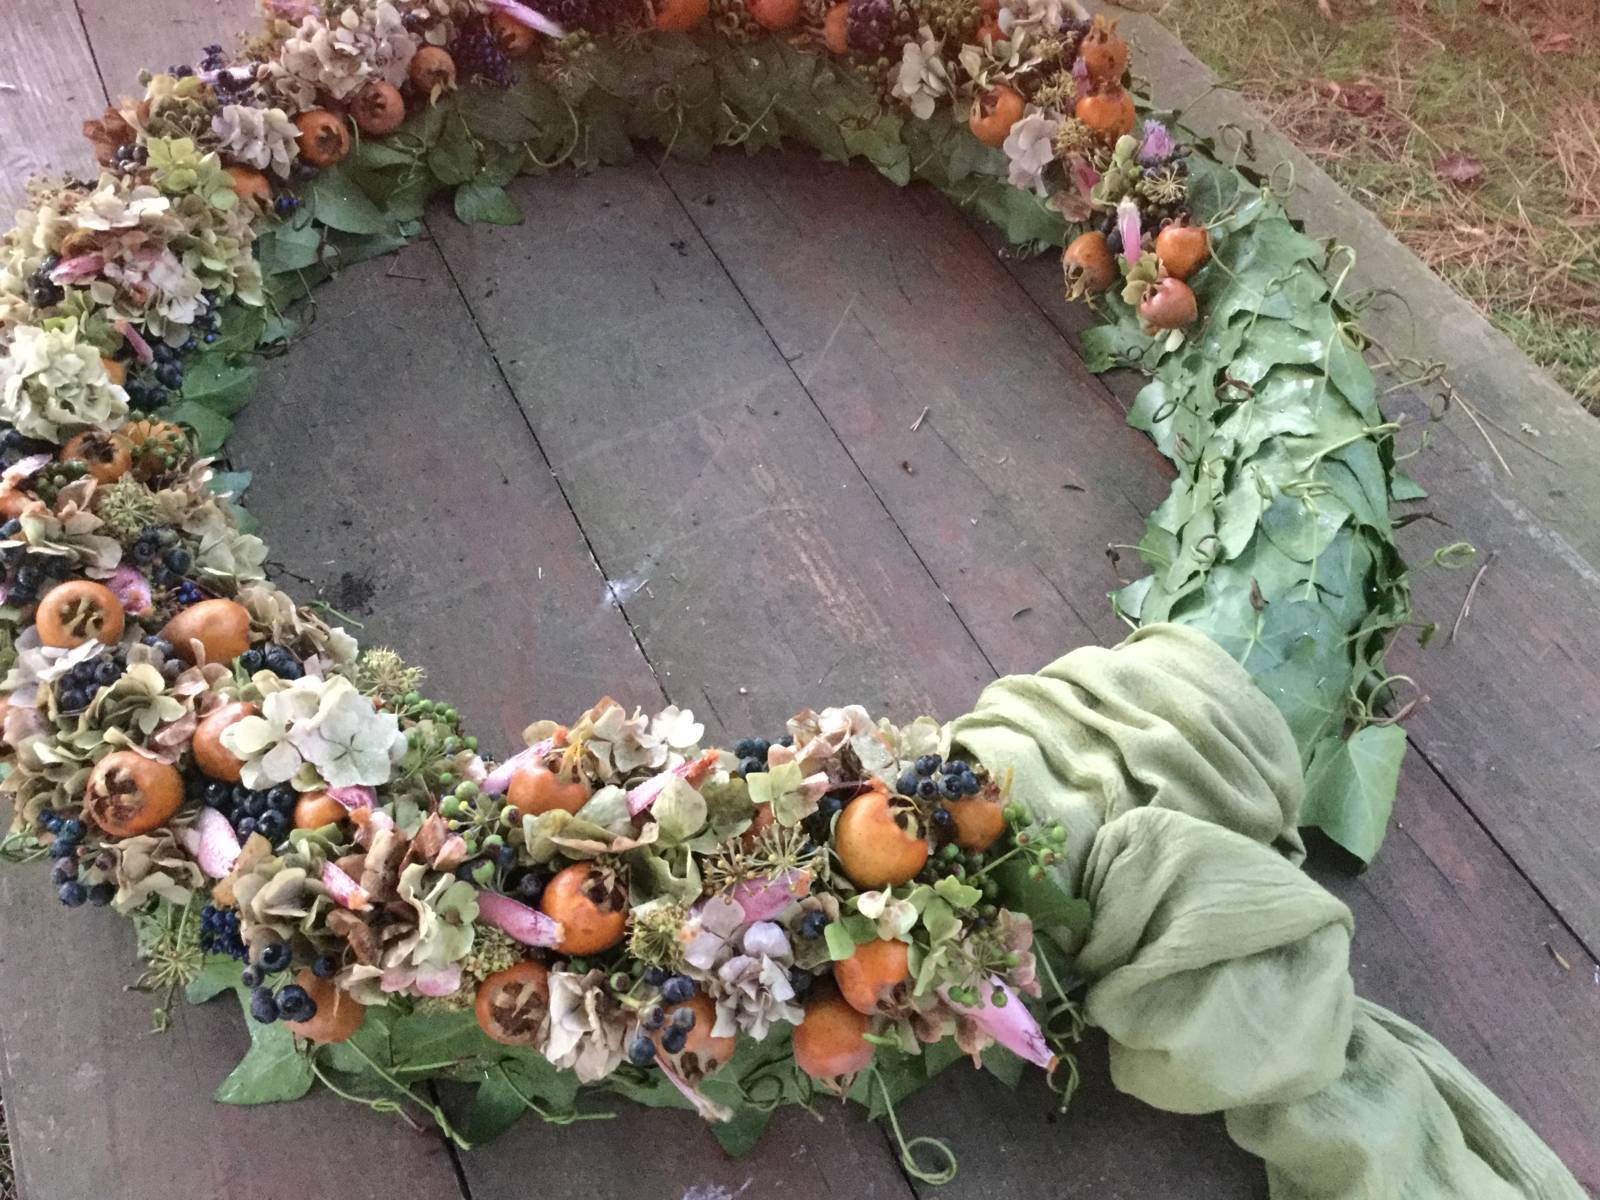 Mourning flowers - funeral flower arrangements